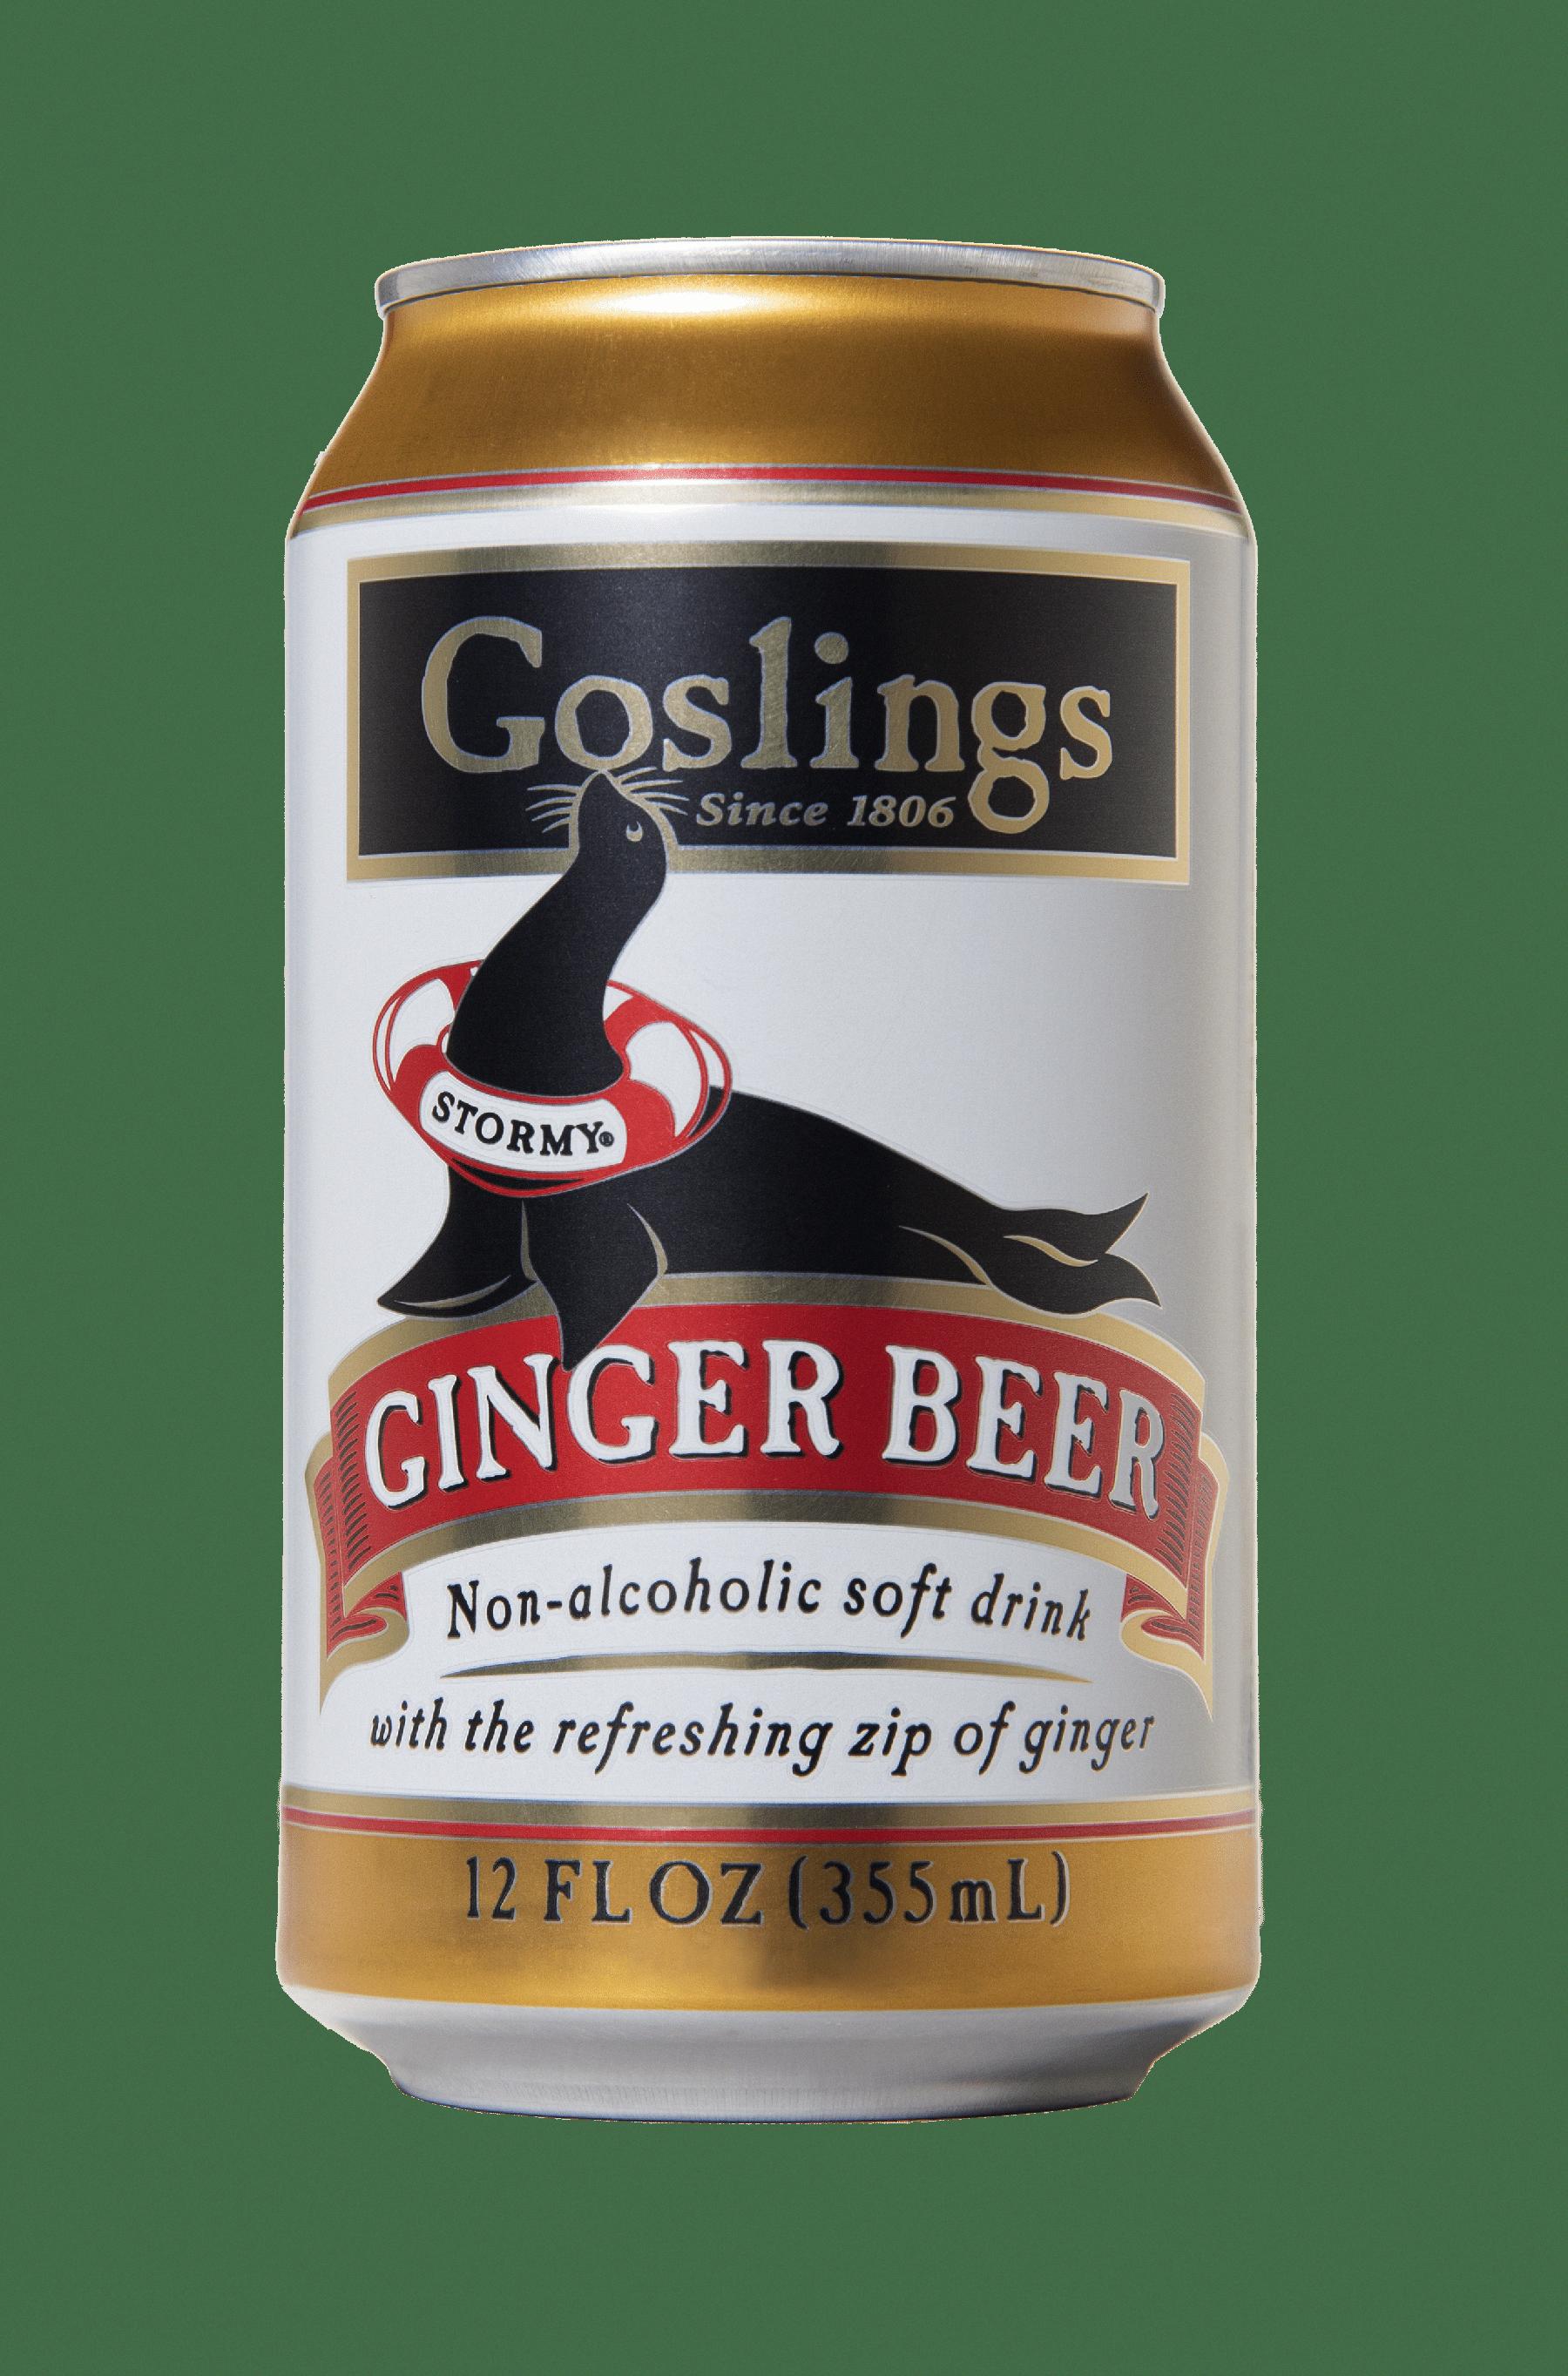 goslings ginger beer nutrition facts 1